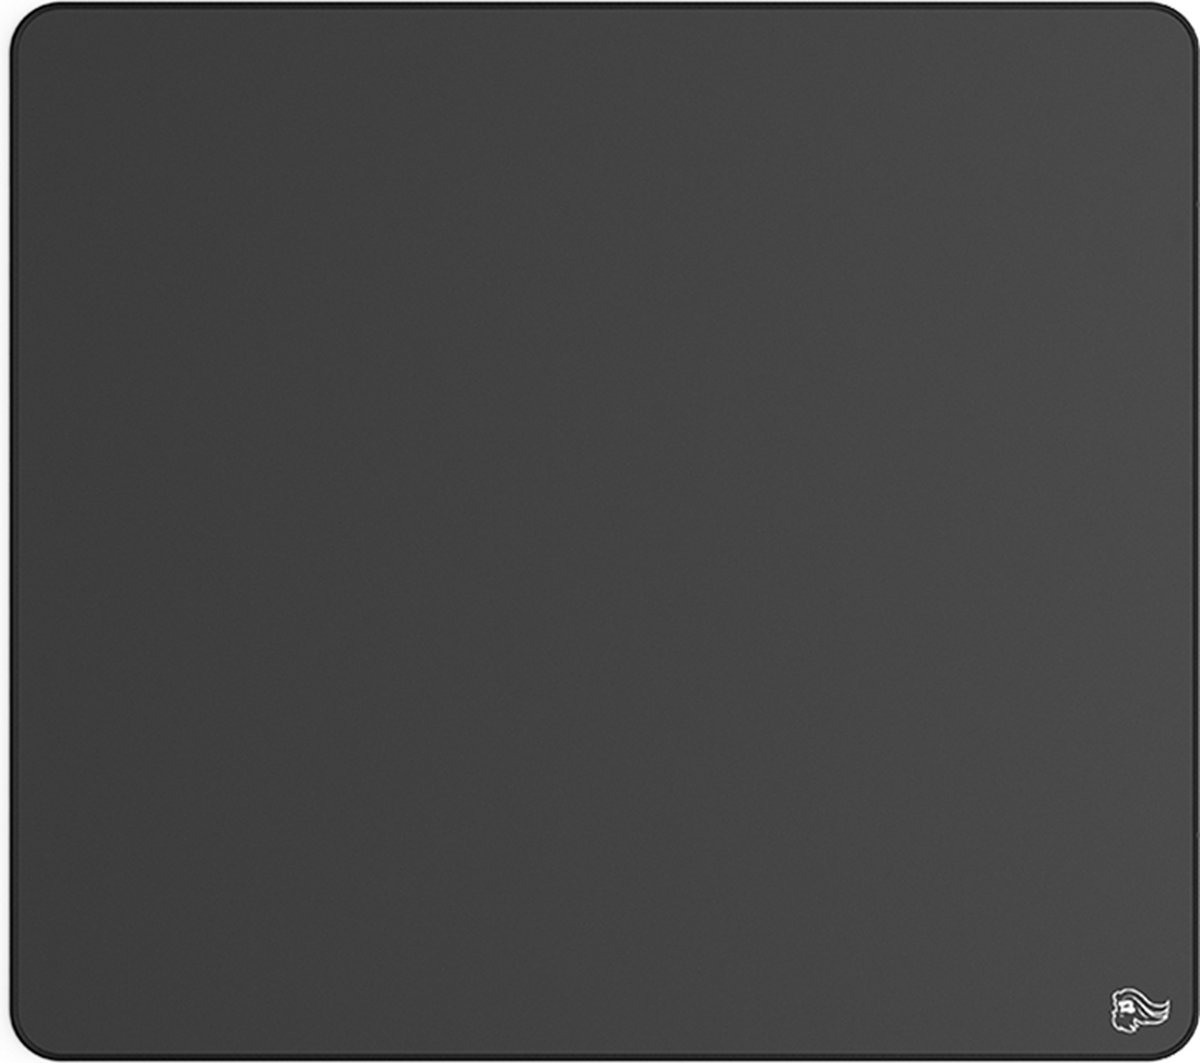 Glorious Elements Ice - Muismat - 46 x 41 cm - zwart